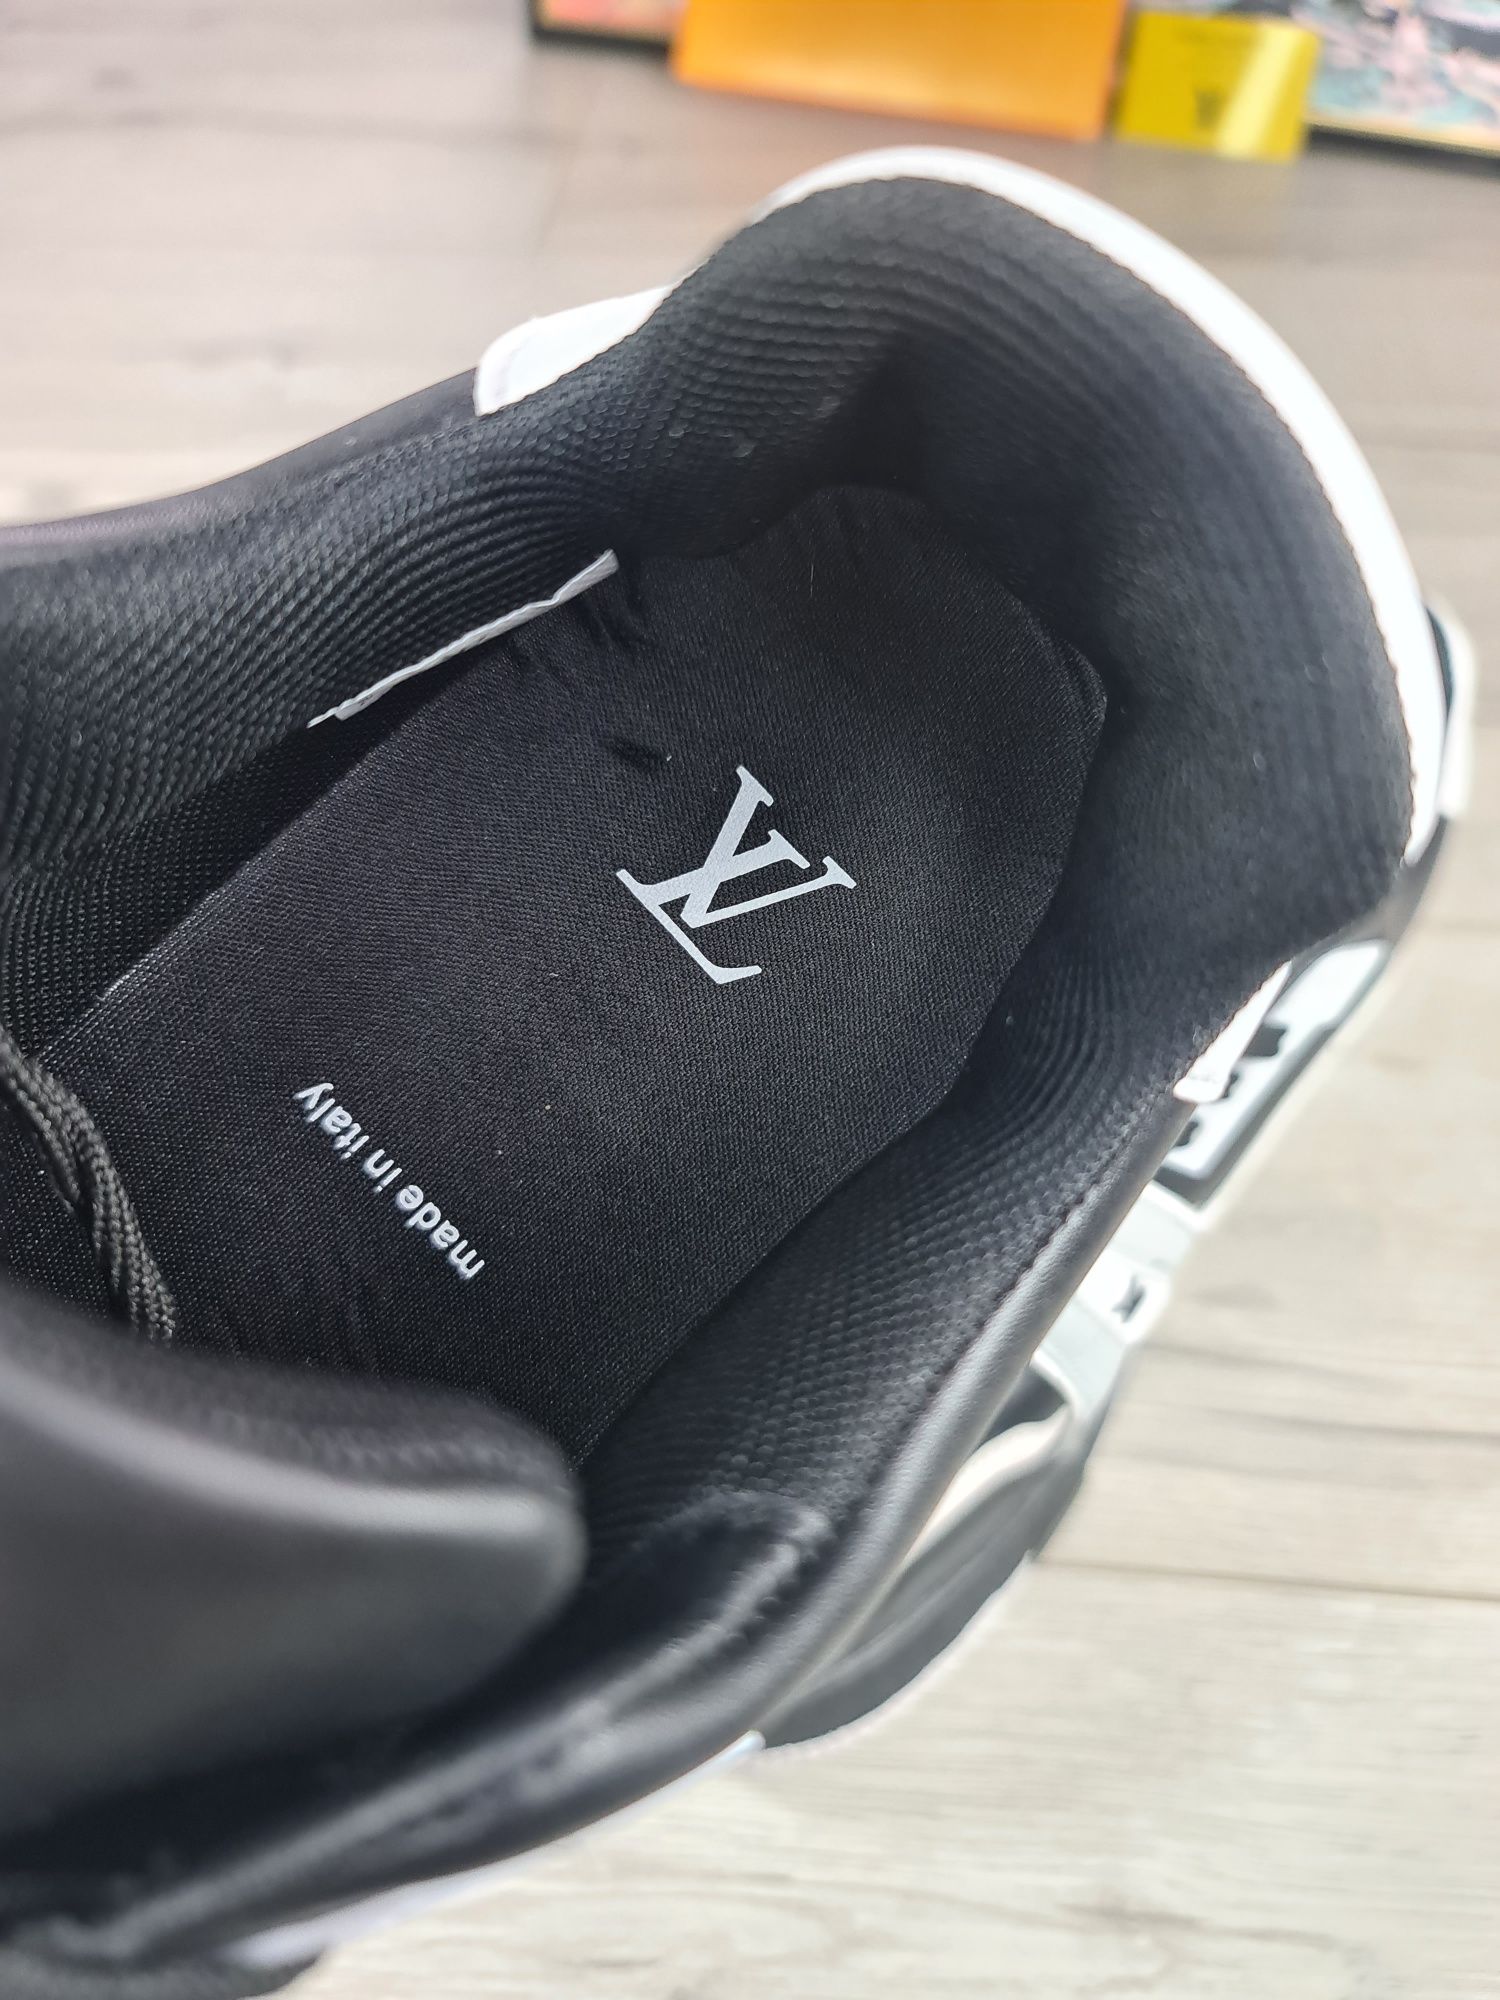 Sneakers-Loius-Vuitton-Transport-Gratuit-Breloc-LV+Parfum-Cadou-Noi